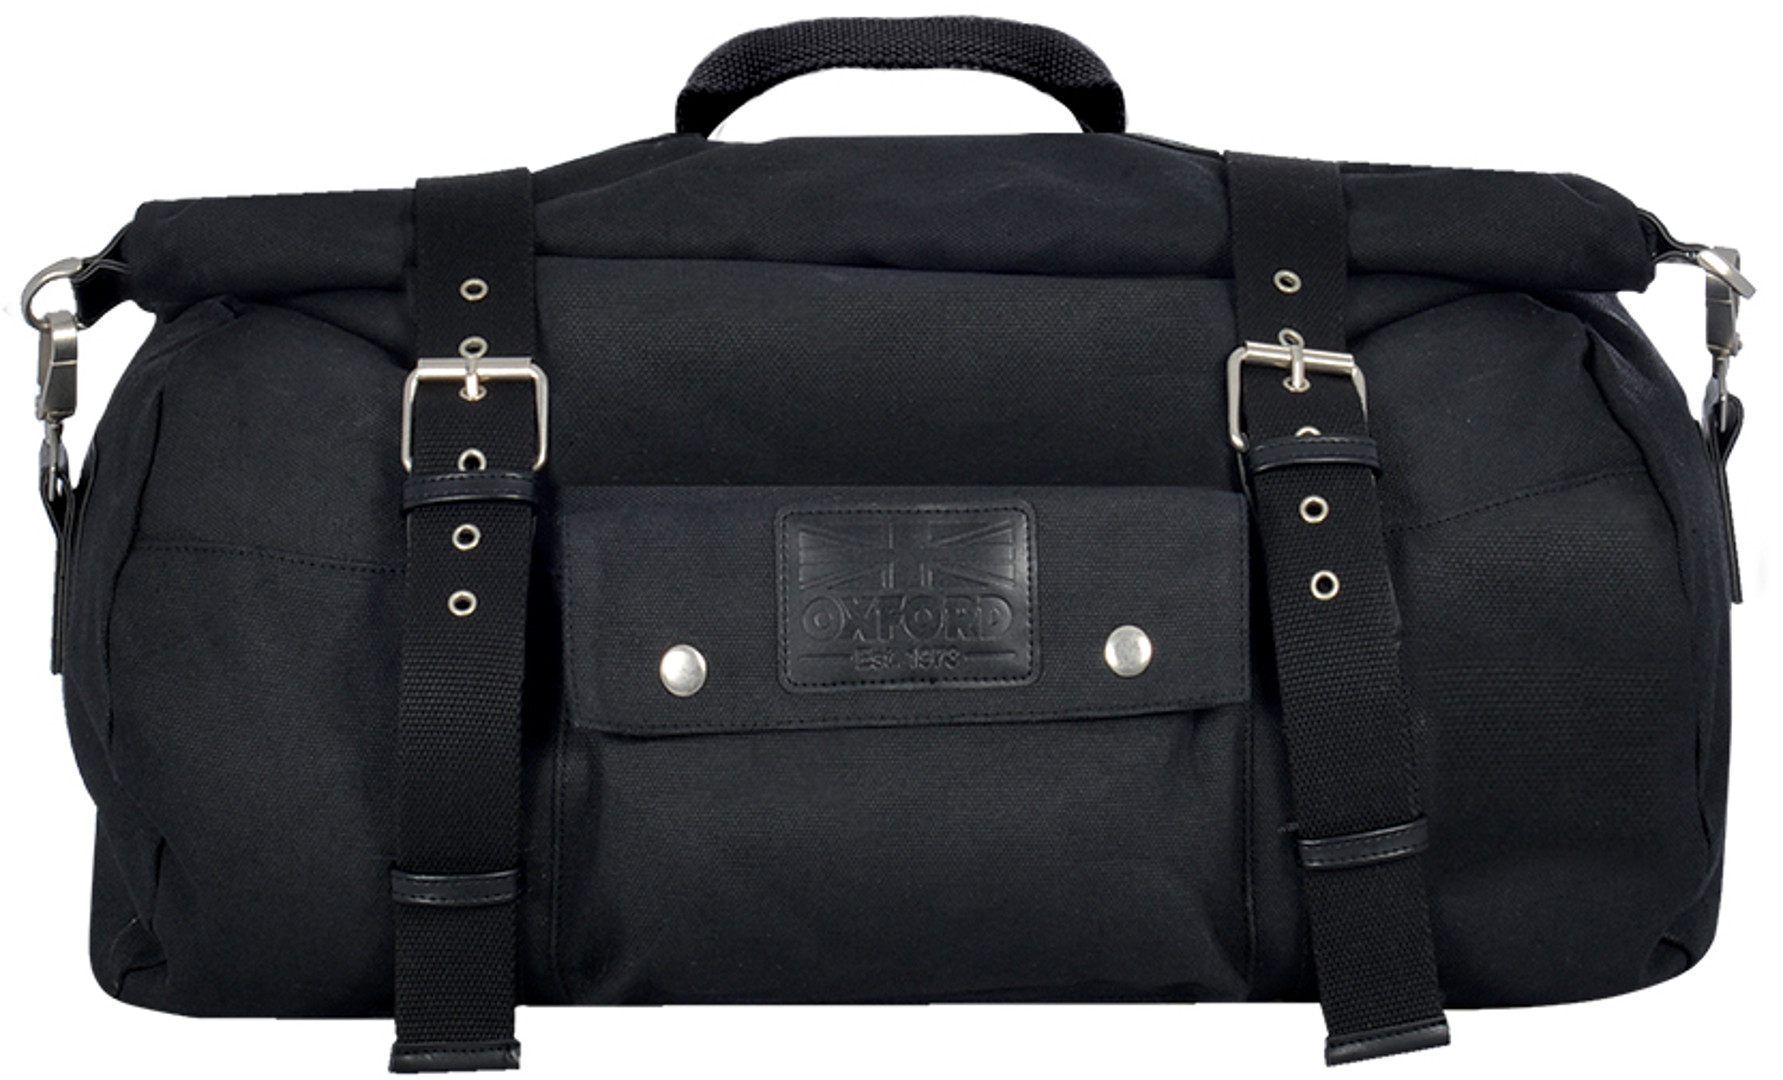 Oxford Heritage 30l Travel Bag  - Black